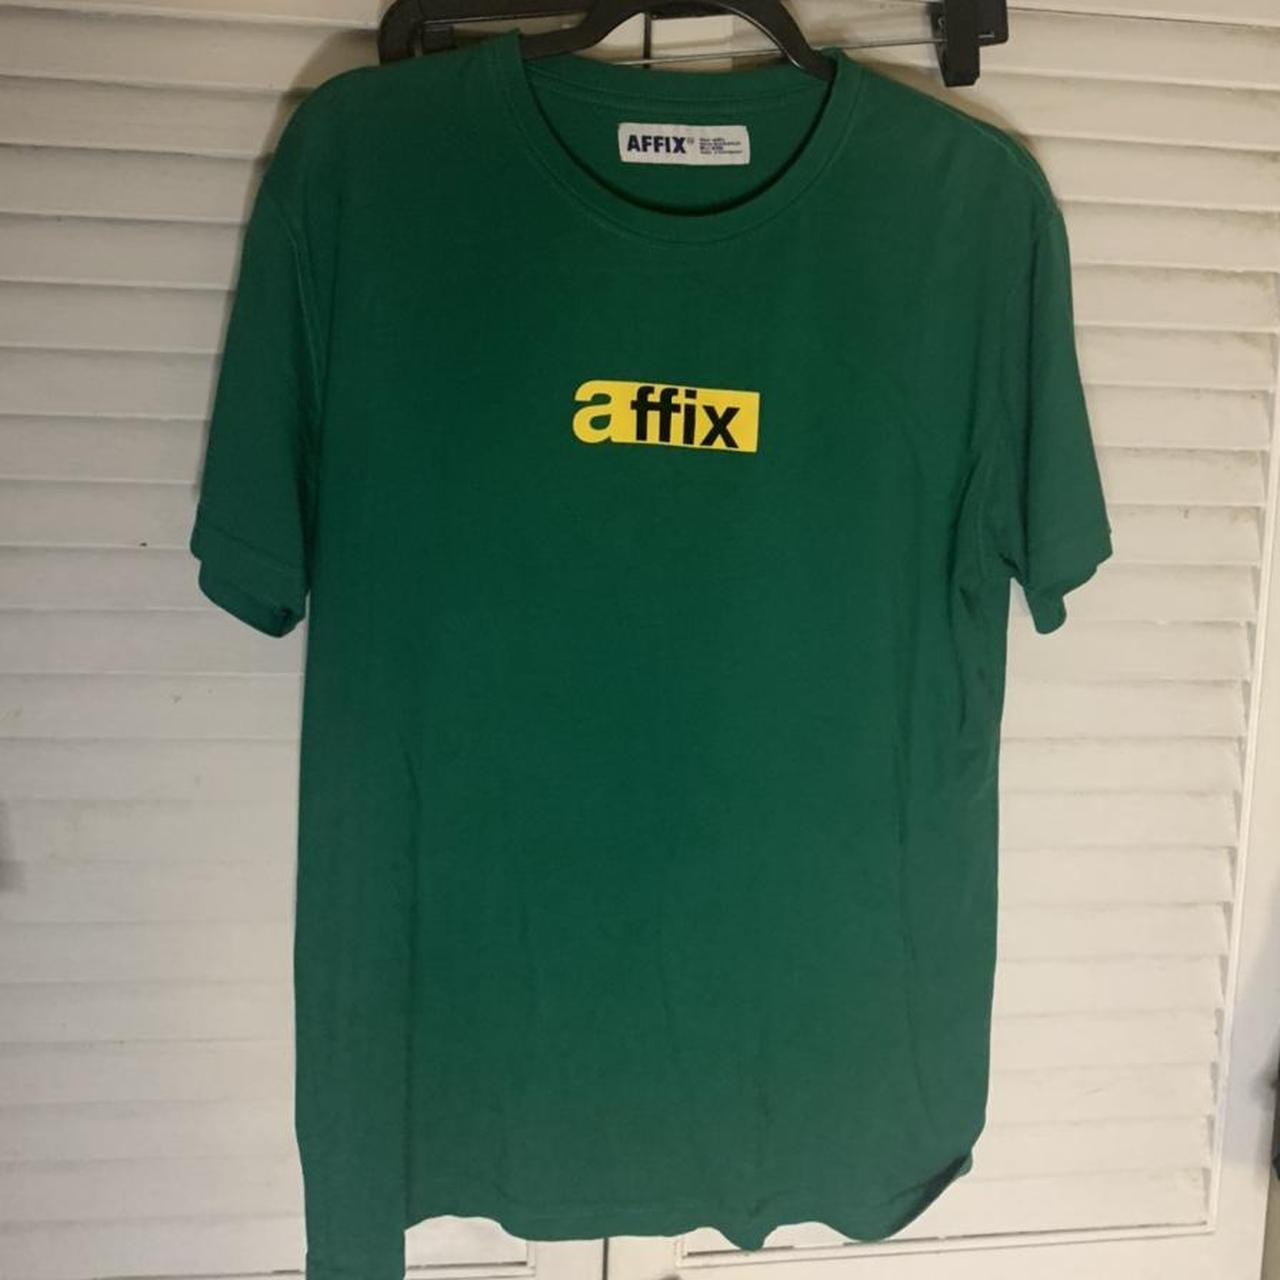 Affix Men's Green and Yellow T-shirt